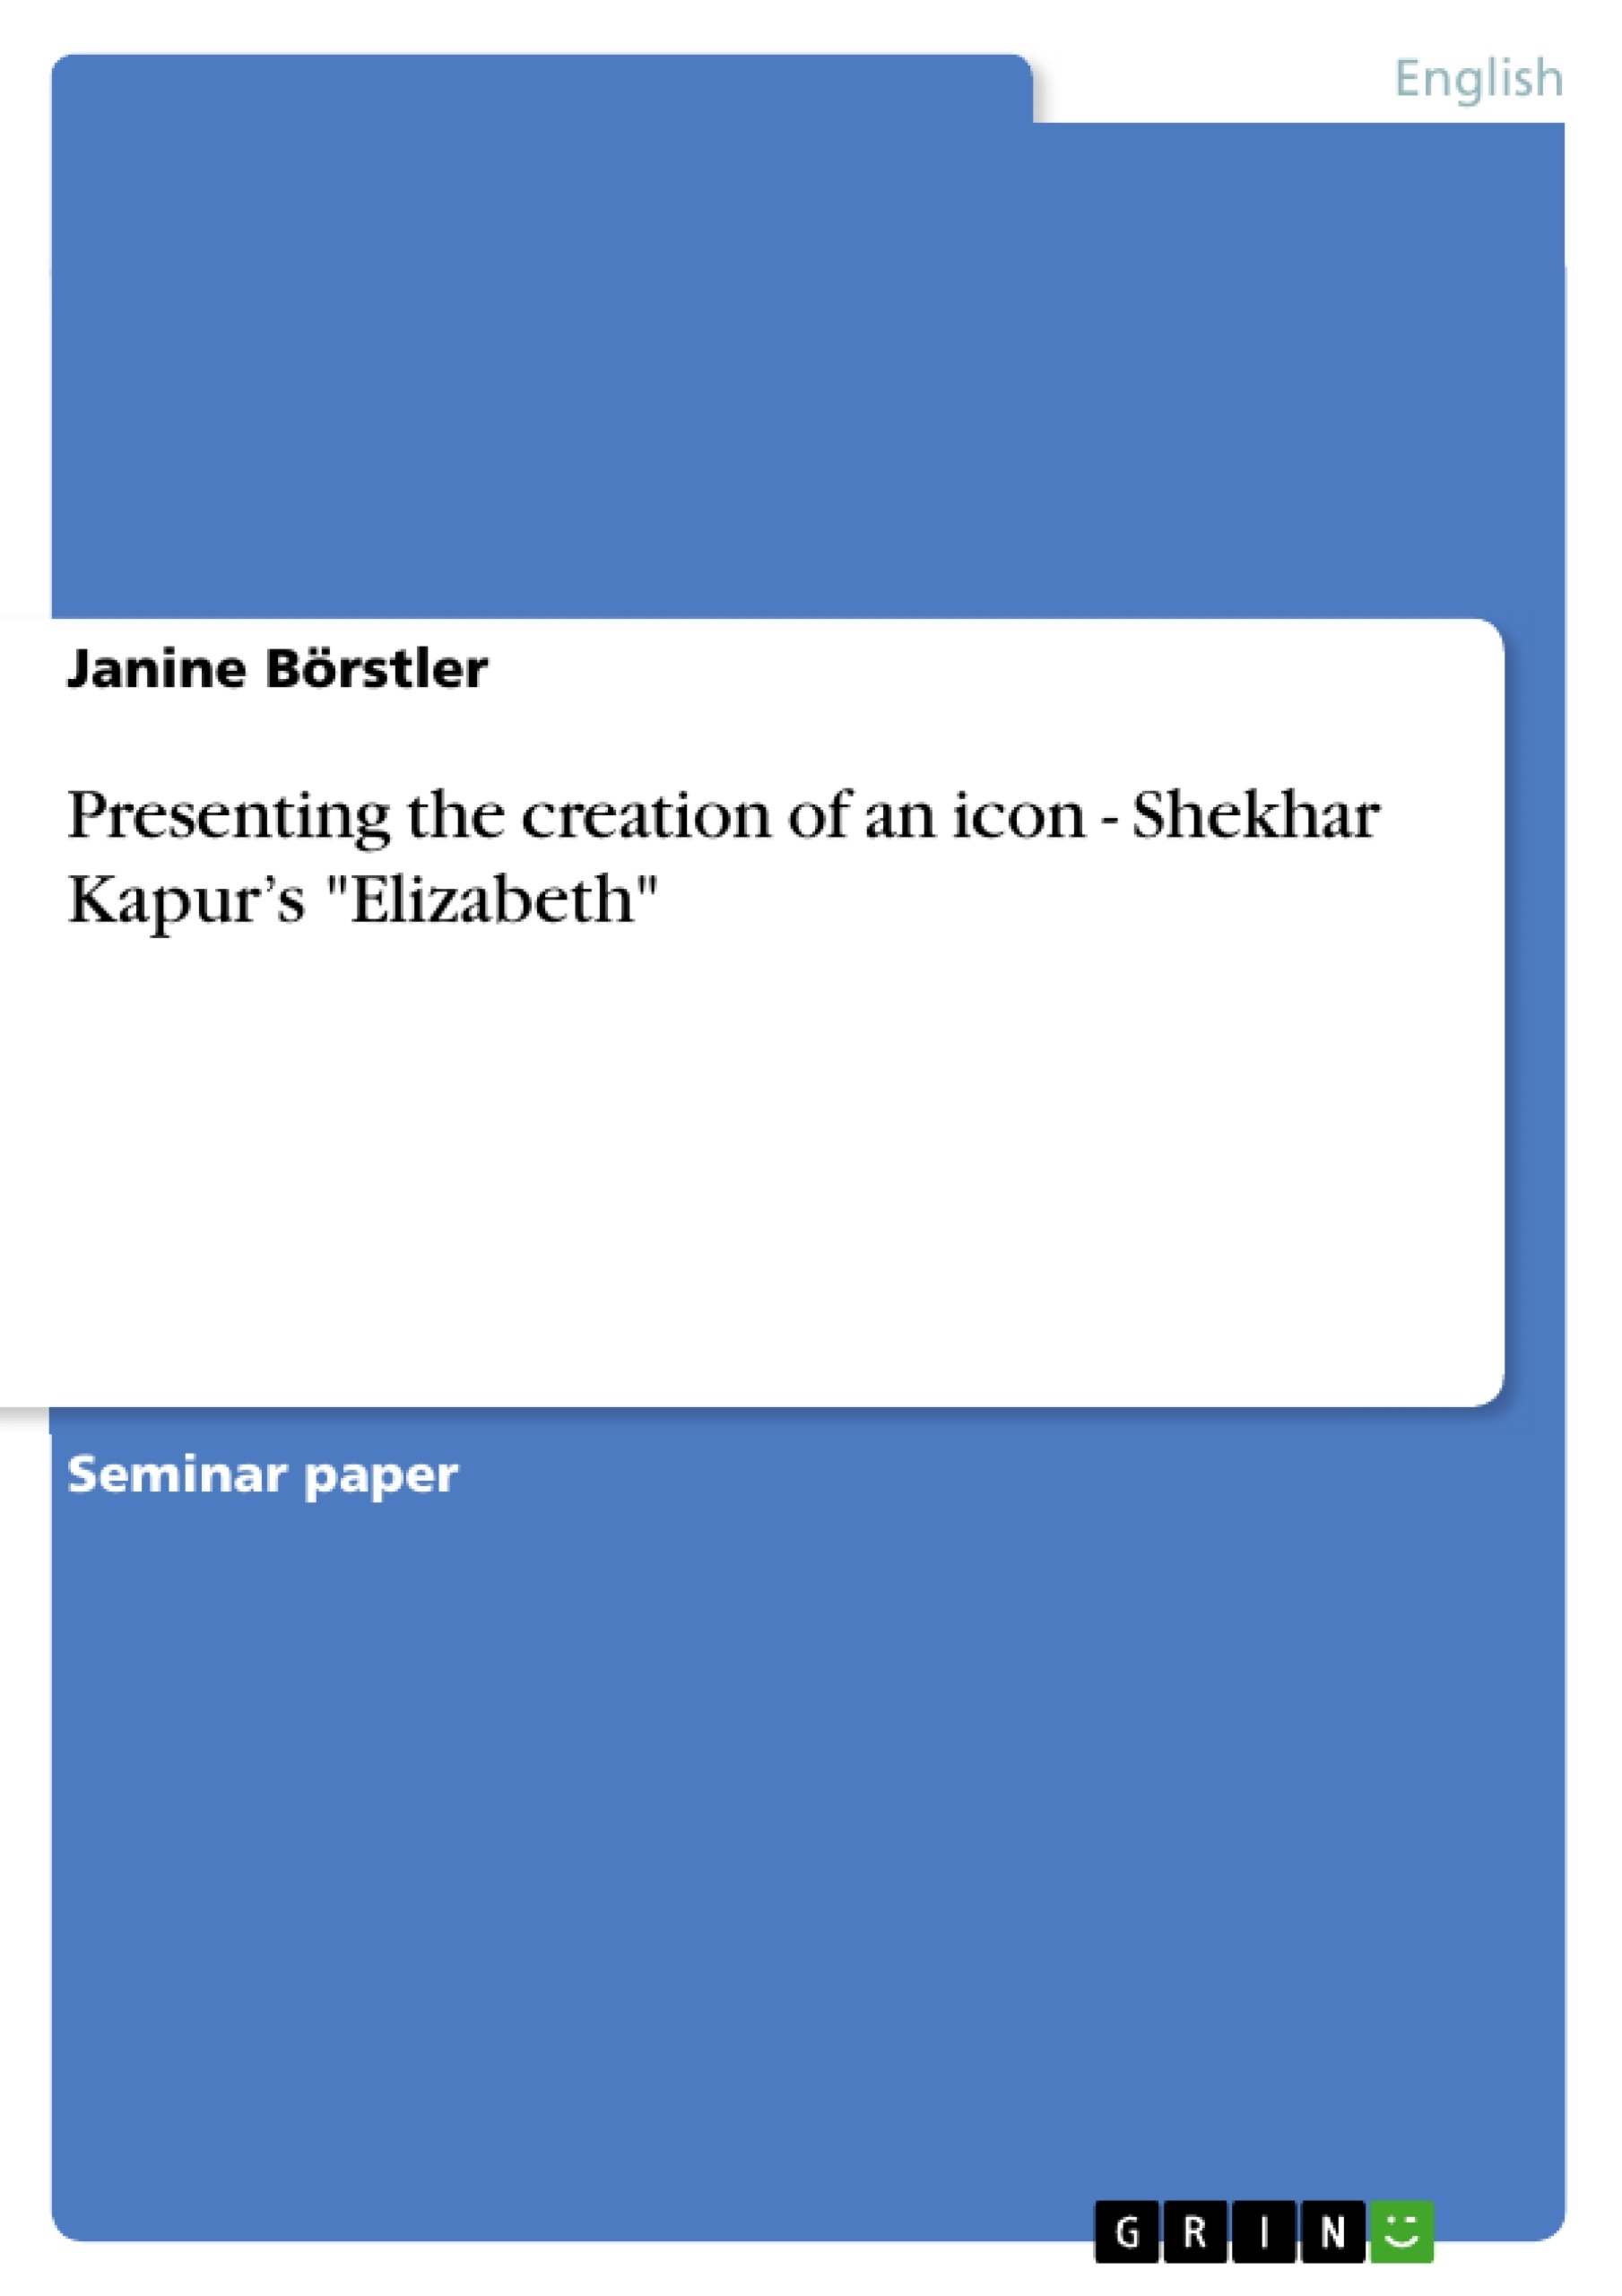 Titre: Presenting the creation of an icon - Shekhar Kapur’s "Elizabeth"